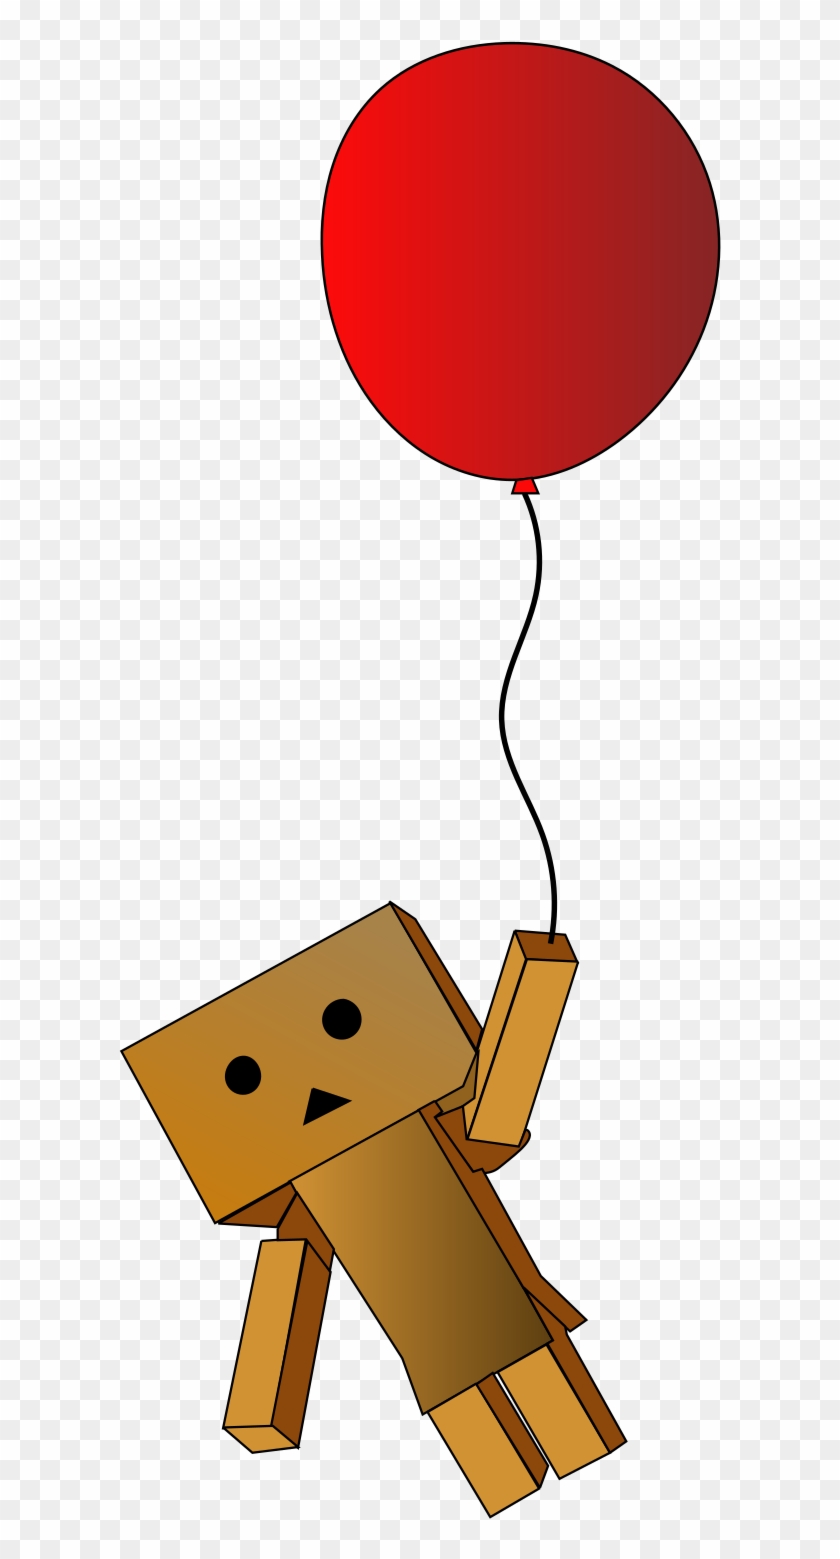 Free Robot - Robot Holding Balloon #275314